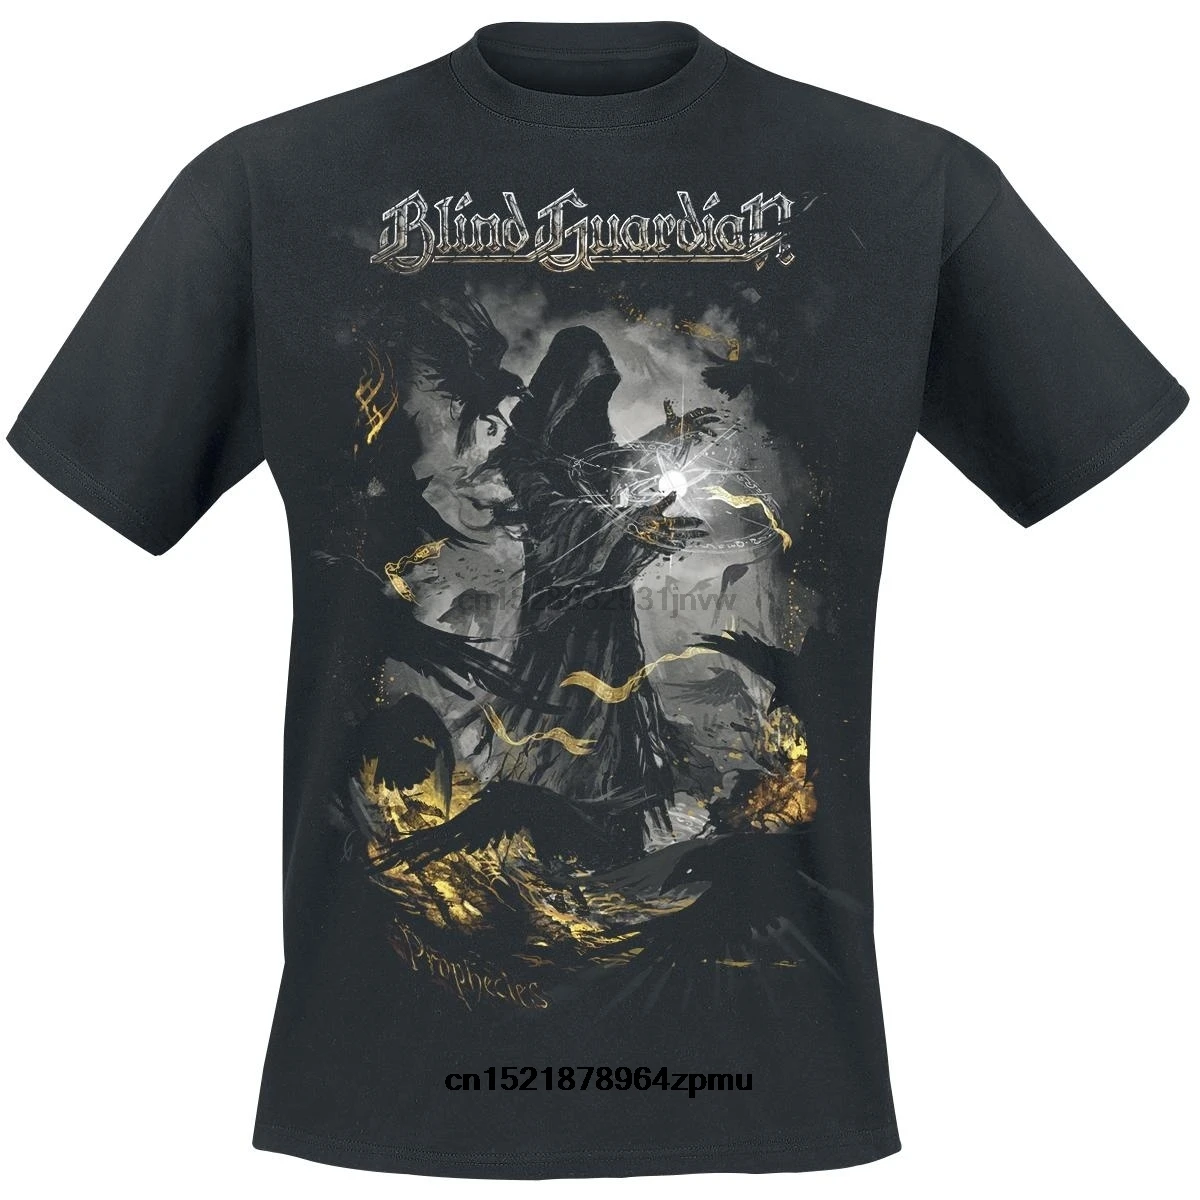 

Men T shirt Prophecies Blind Guardian funny t-shirt novelty tshirt women